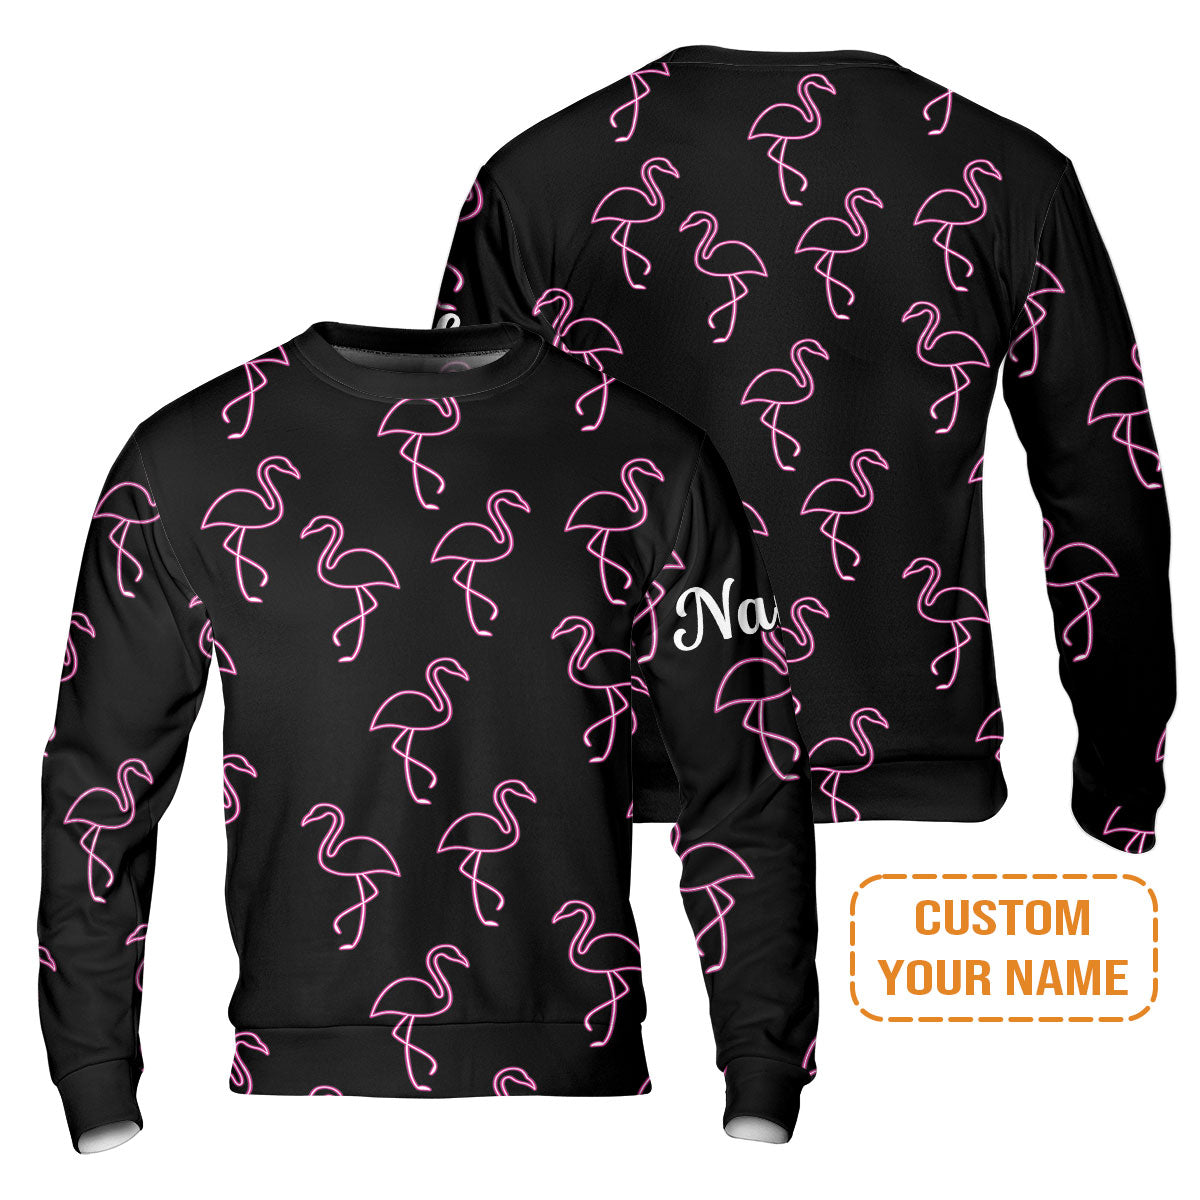 Flamingo Golf Sweatshirt - Custom Name Neon Pink Flamingos Pattern Apparel - Personalized Gift For Golf Lover, Team, Husband, Boyfriend, Men